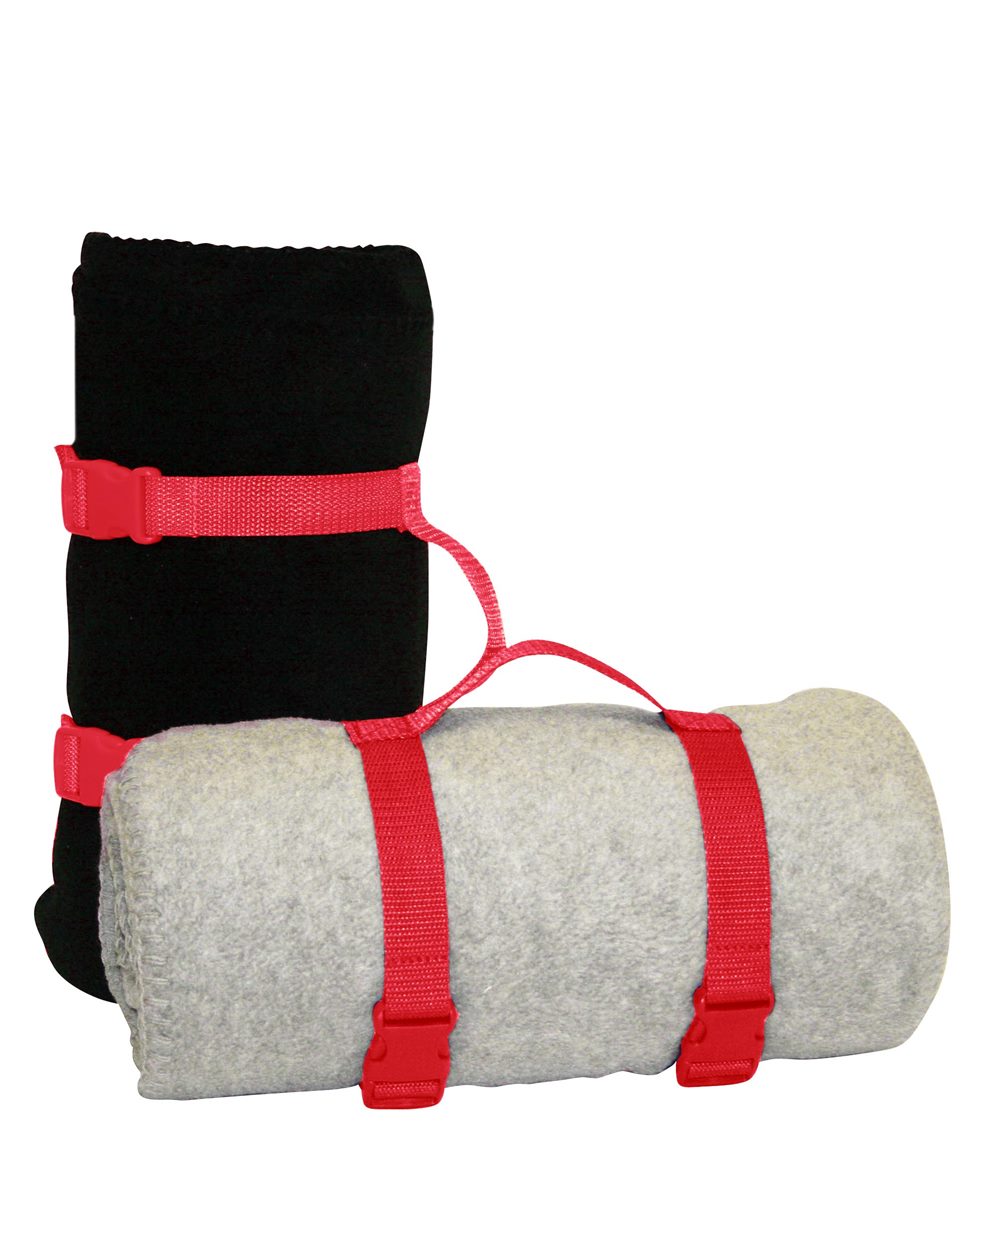 Alpine Fleece 8820 - Blanket Strap